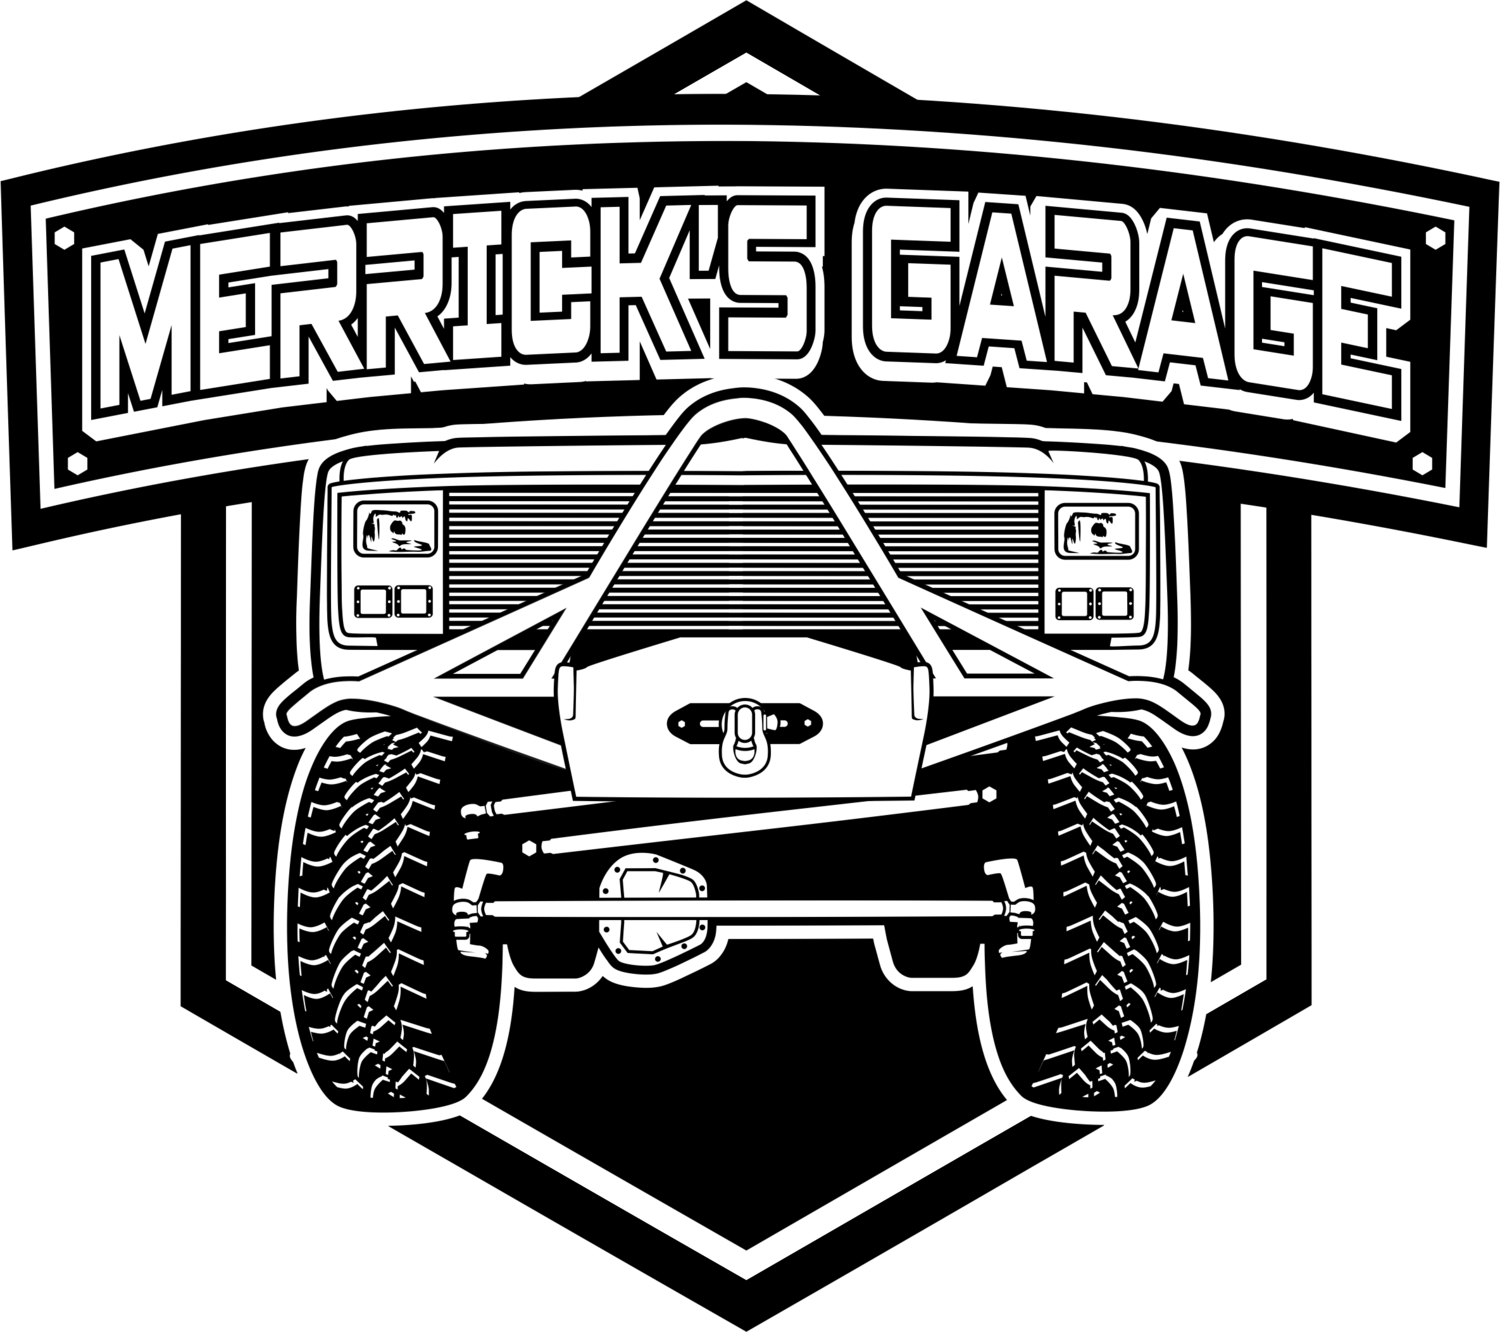 Merricks Garage